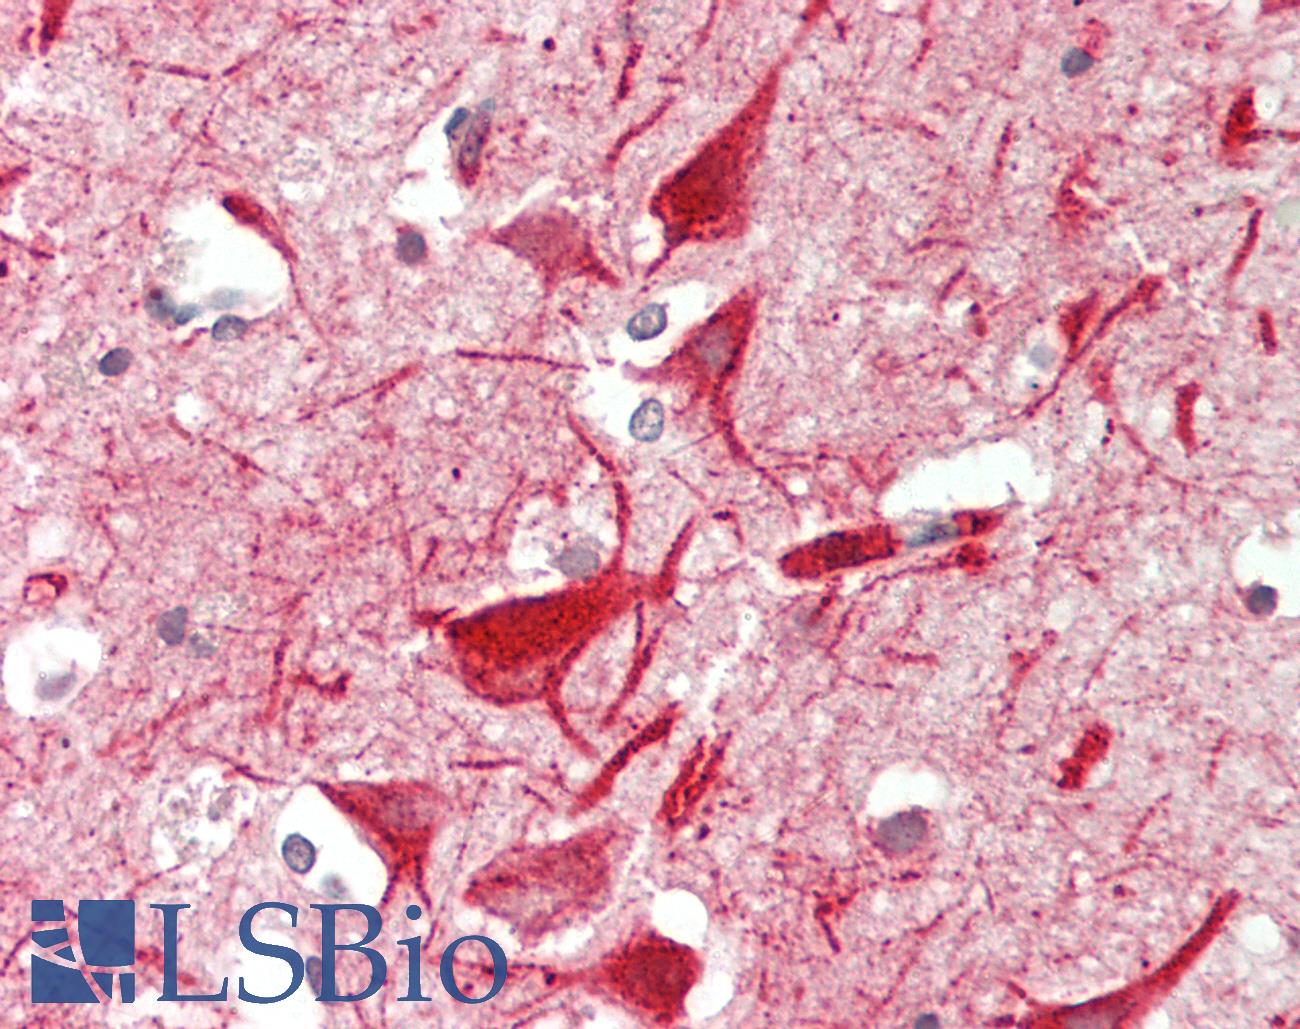 METTL13 / KIAA0859 Antibody - Human Brain, Cortex: Formalin-Fixed, Paraffin-Embedded (FFPE)